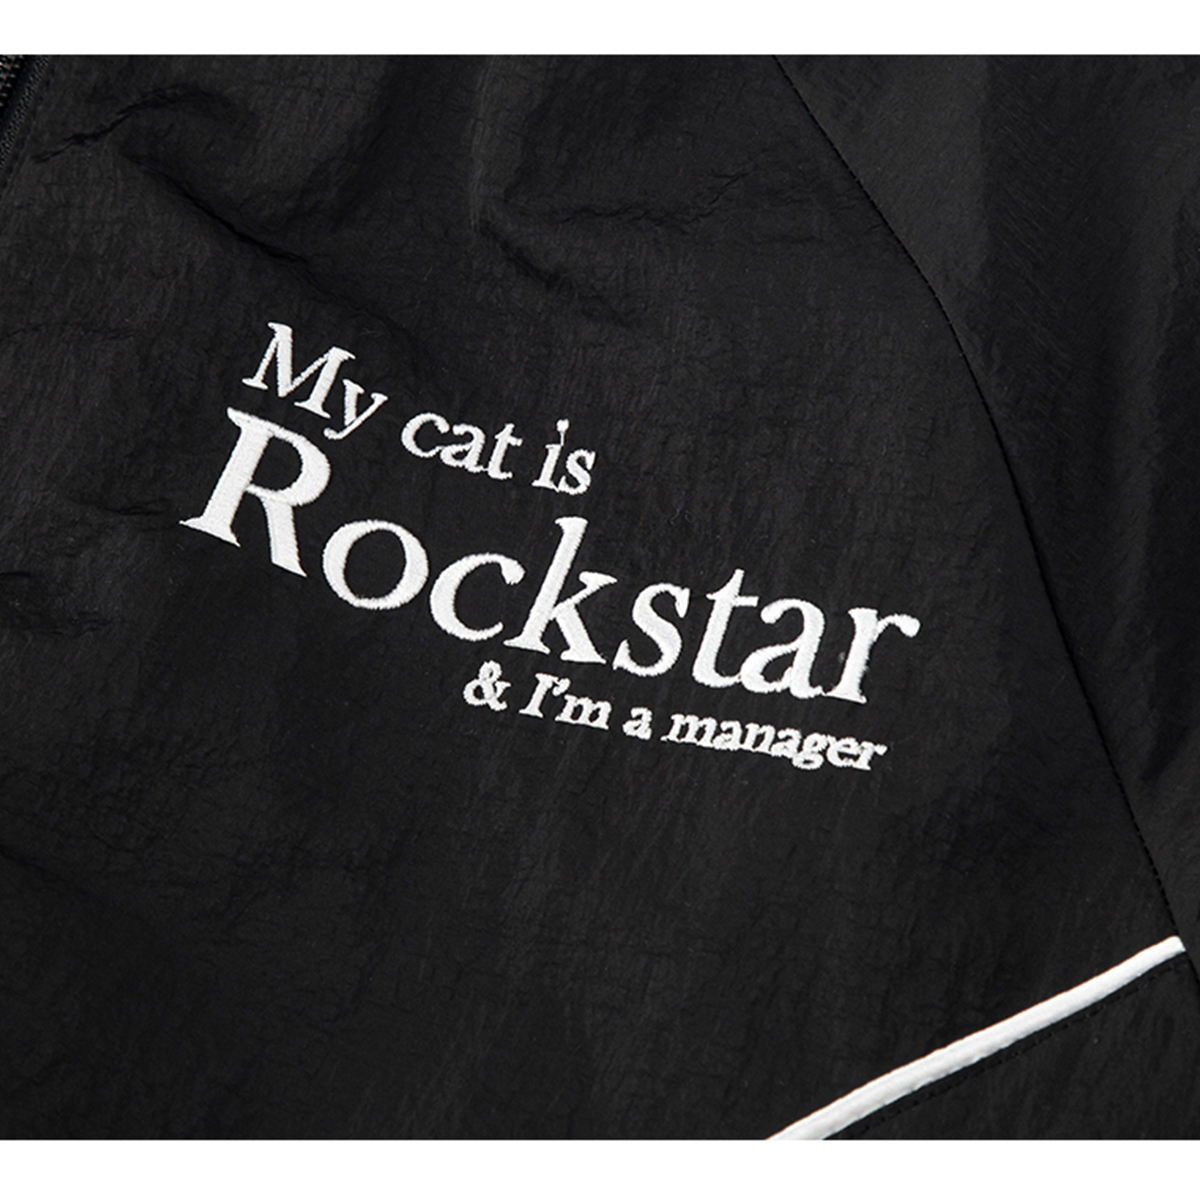 My cat is Rockstar Nylon Track jacket (Black)